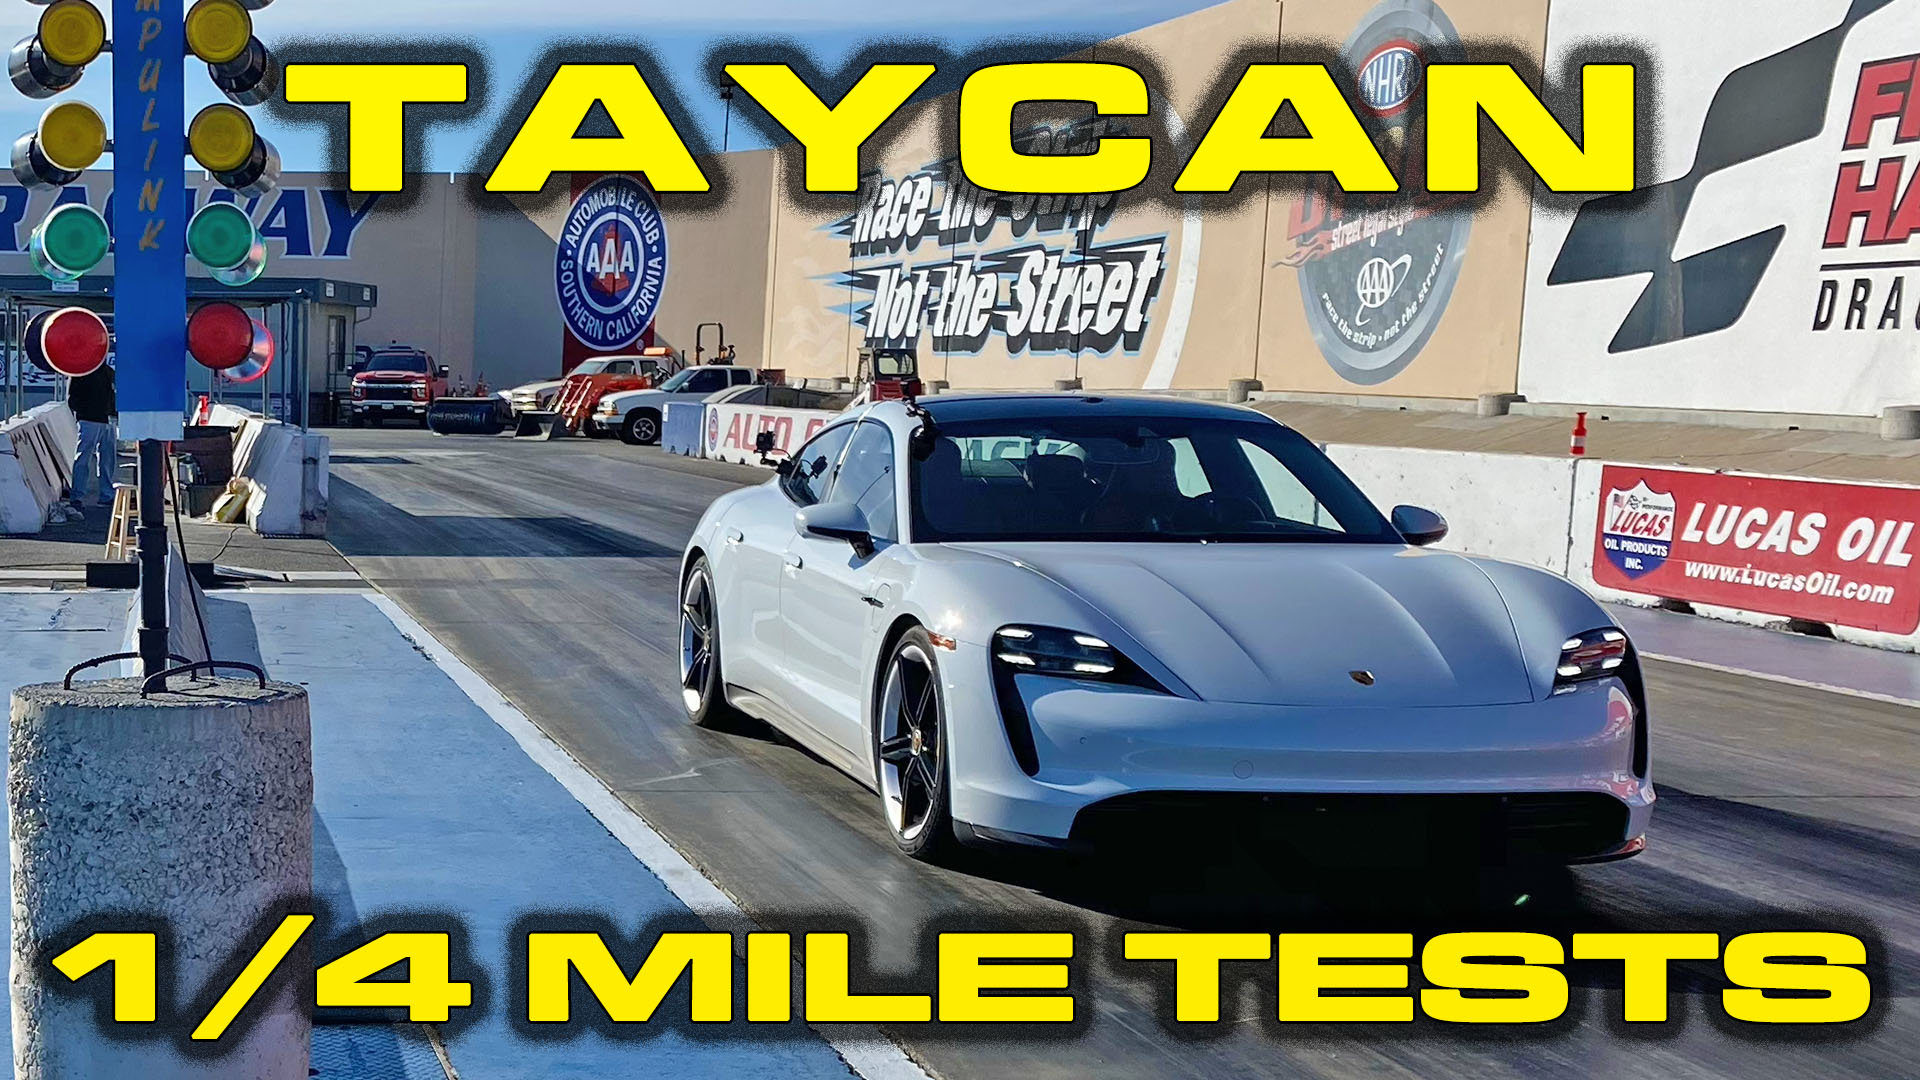 Porsche Taycan 1/4 Mile Results